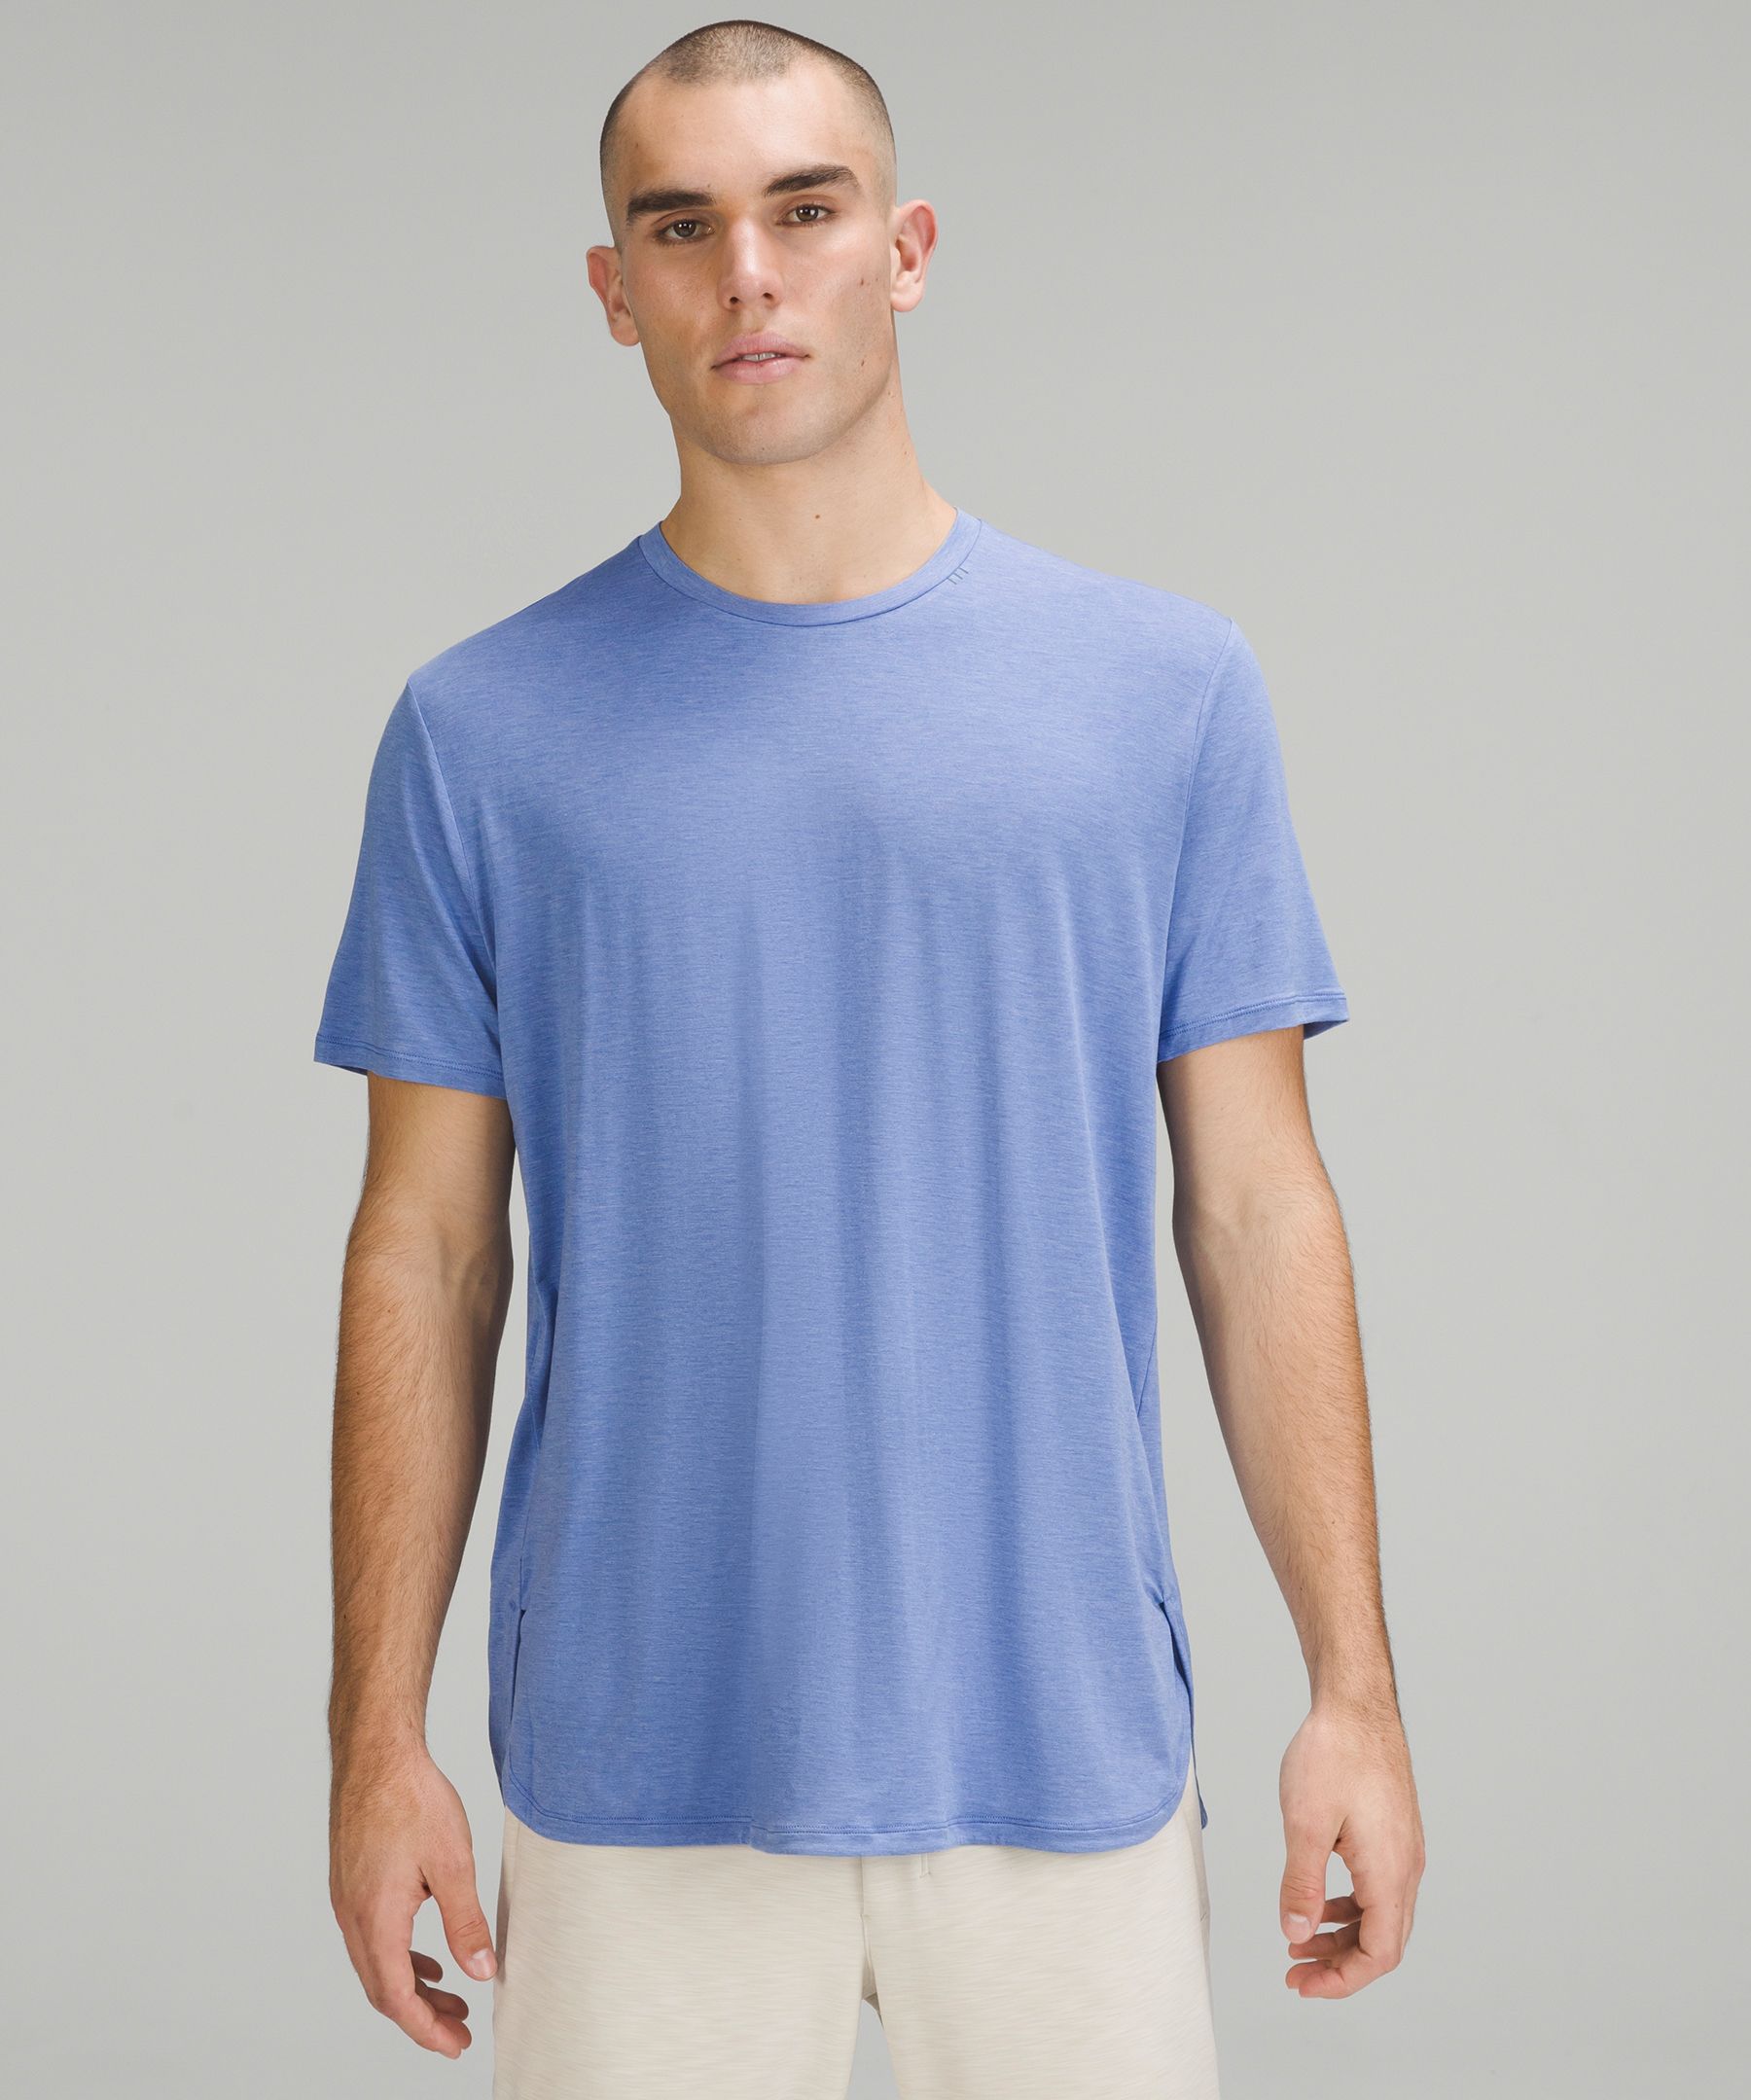 Balancer Short Sleeve Shirt | Men's Short Sleeve Shirts & Tee's | lululemon